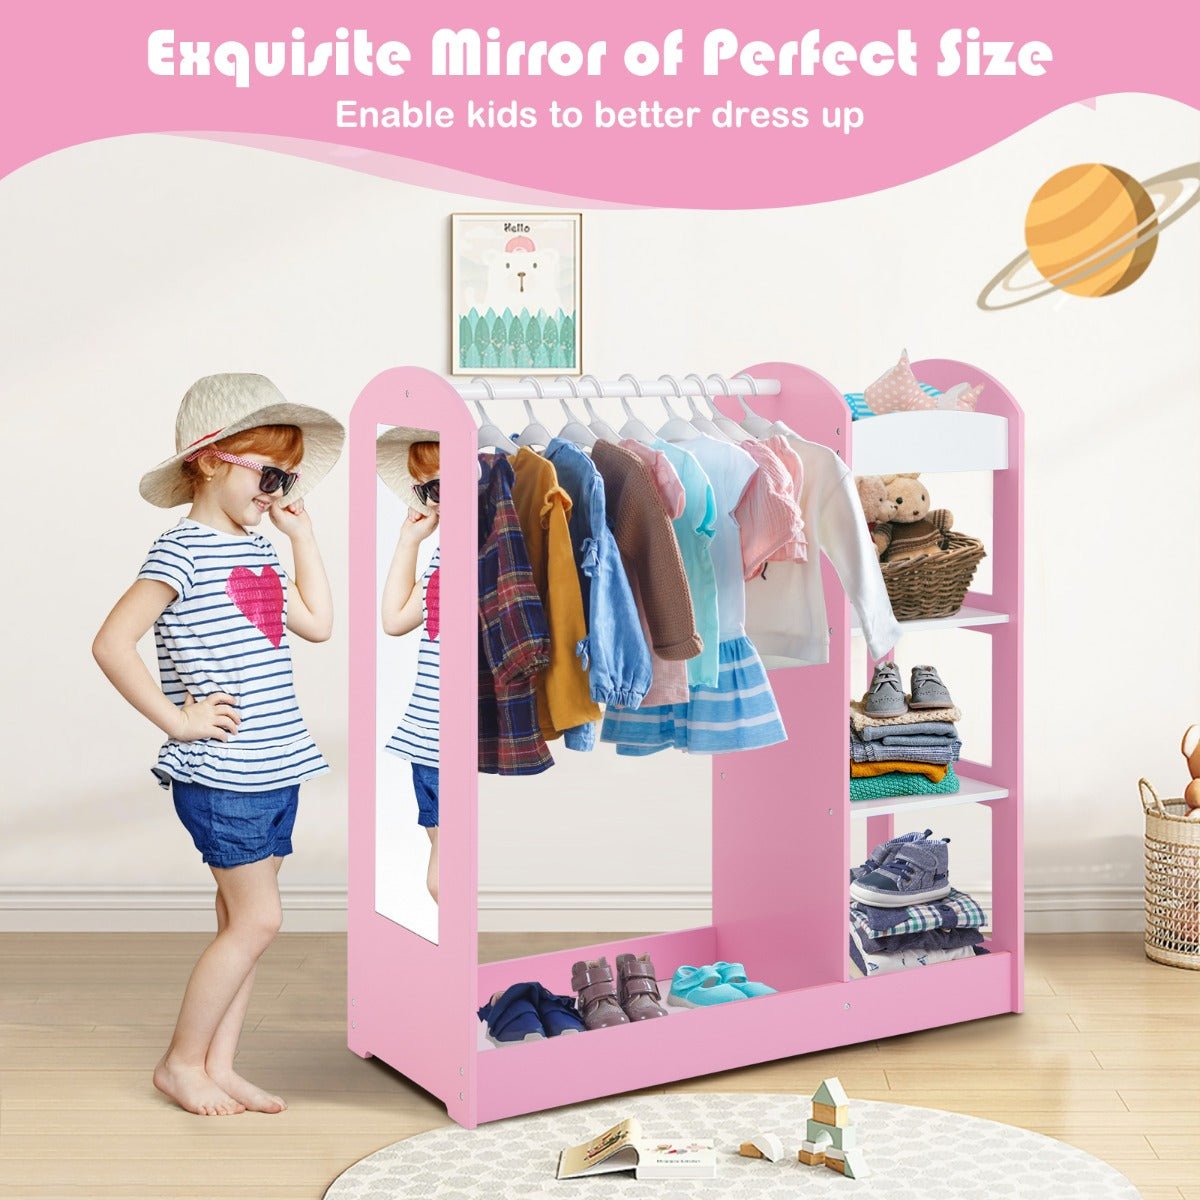 Explore Imagination: Pink Kids Dress Up Storage with Cloth Hanger